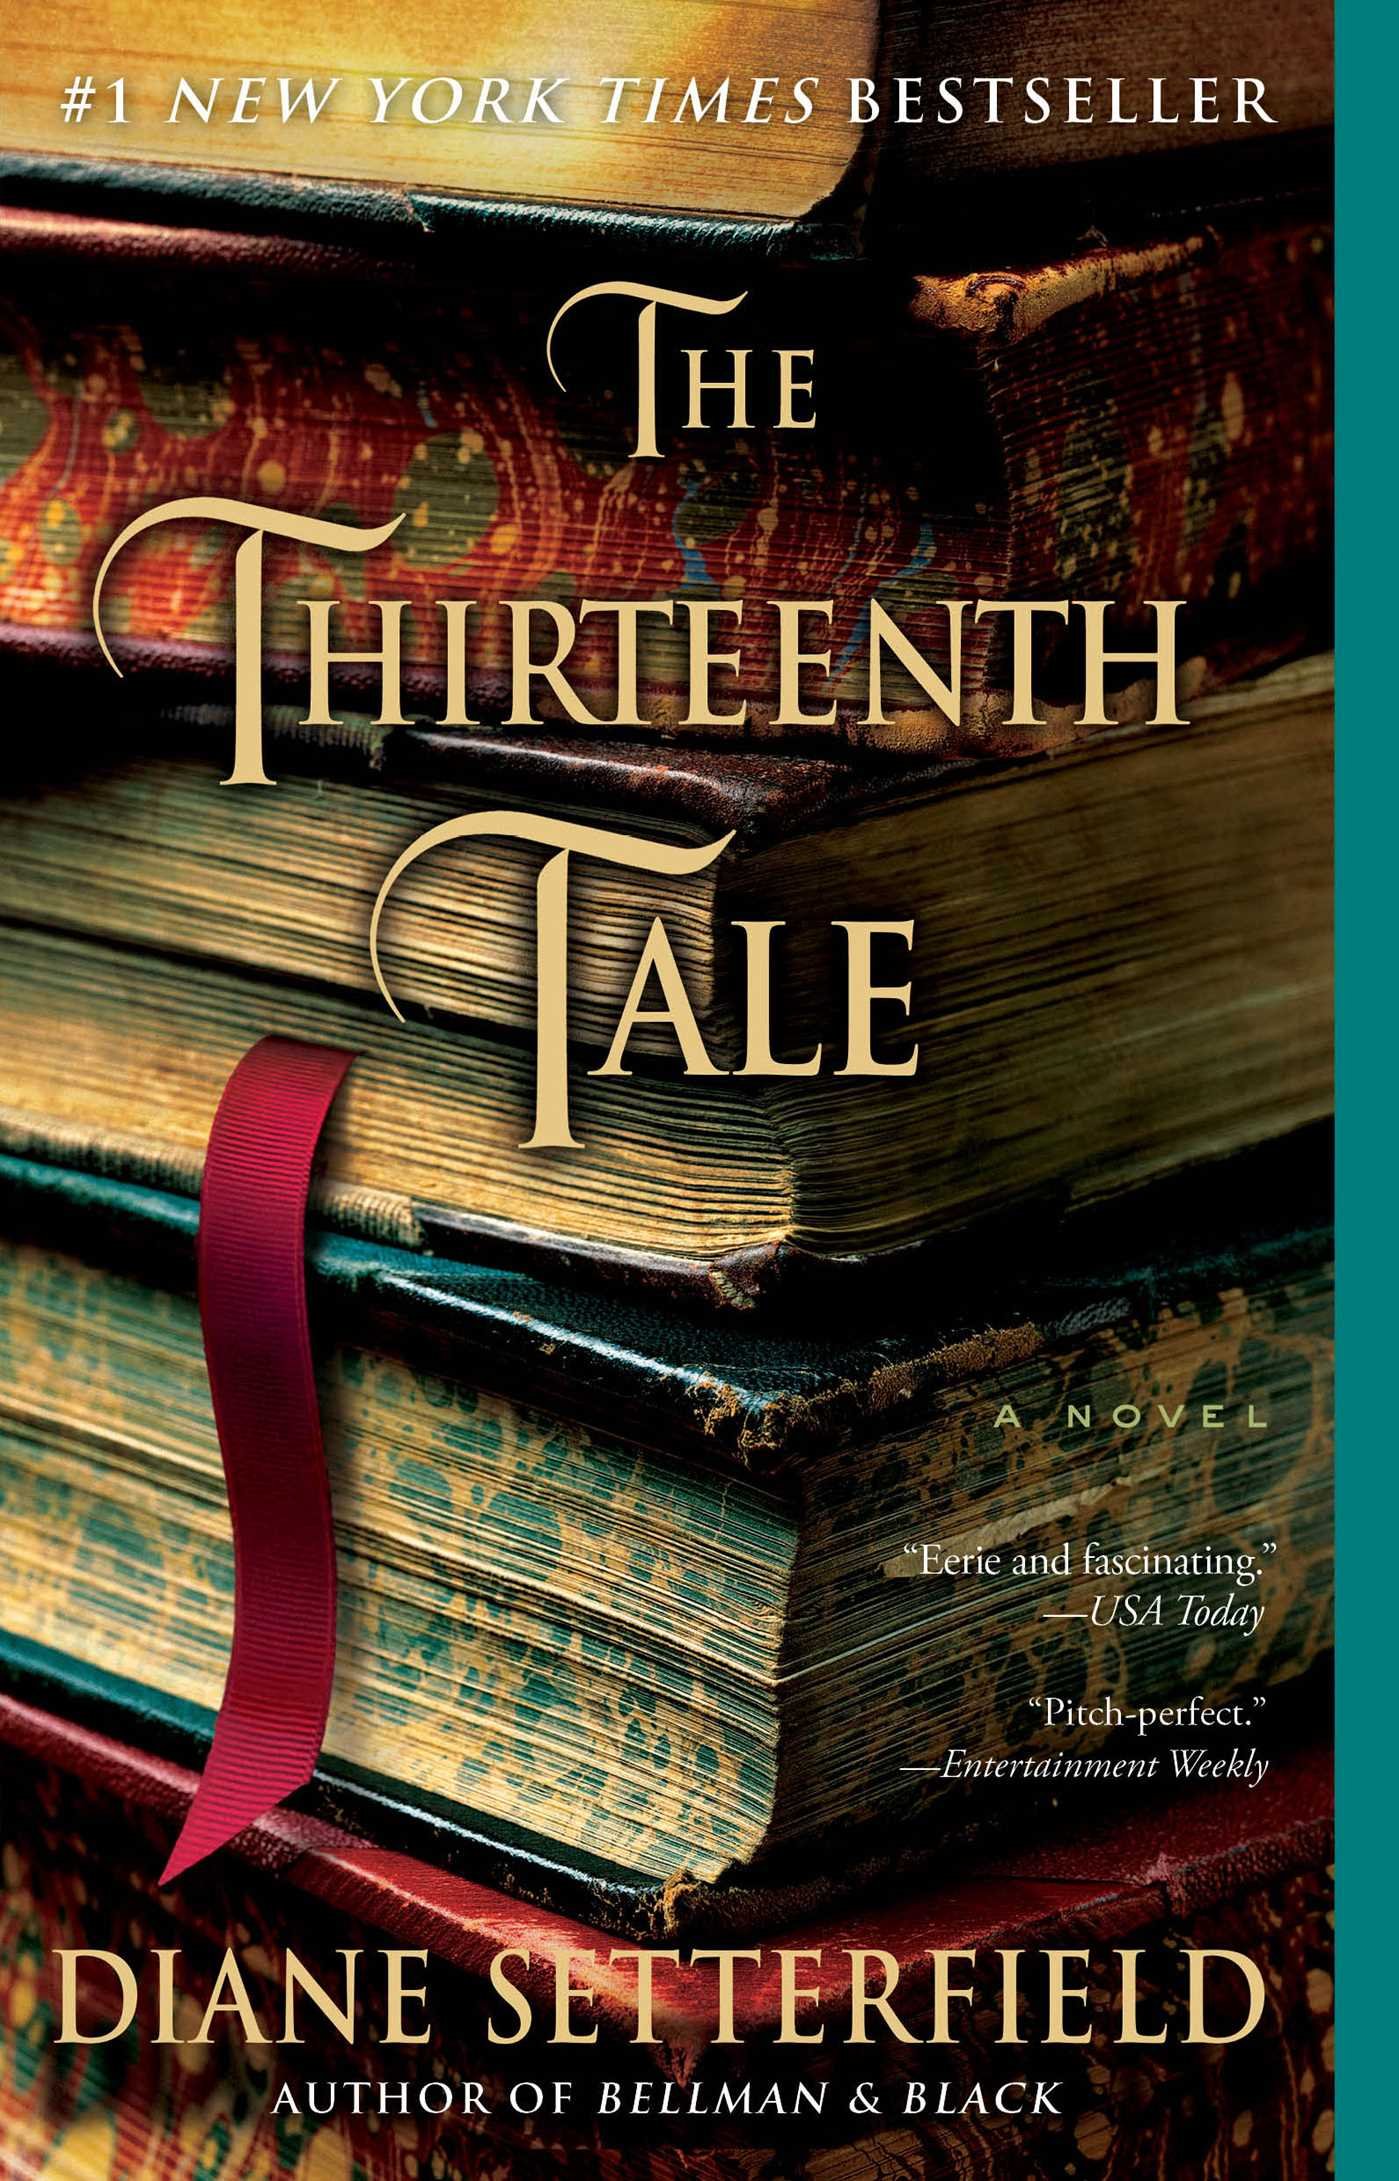 The Thirteenth Tale #1